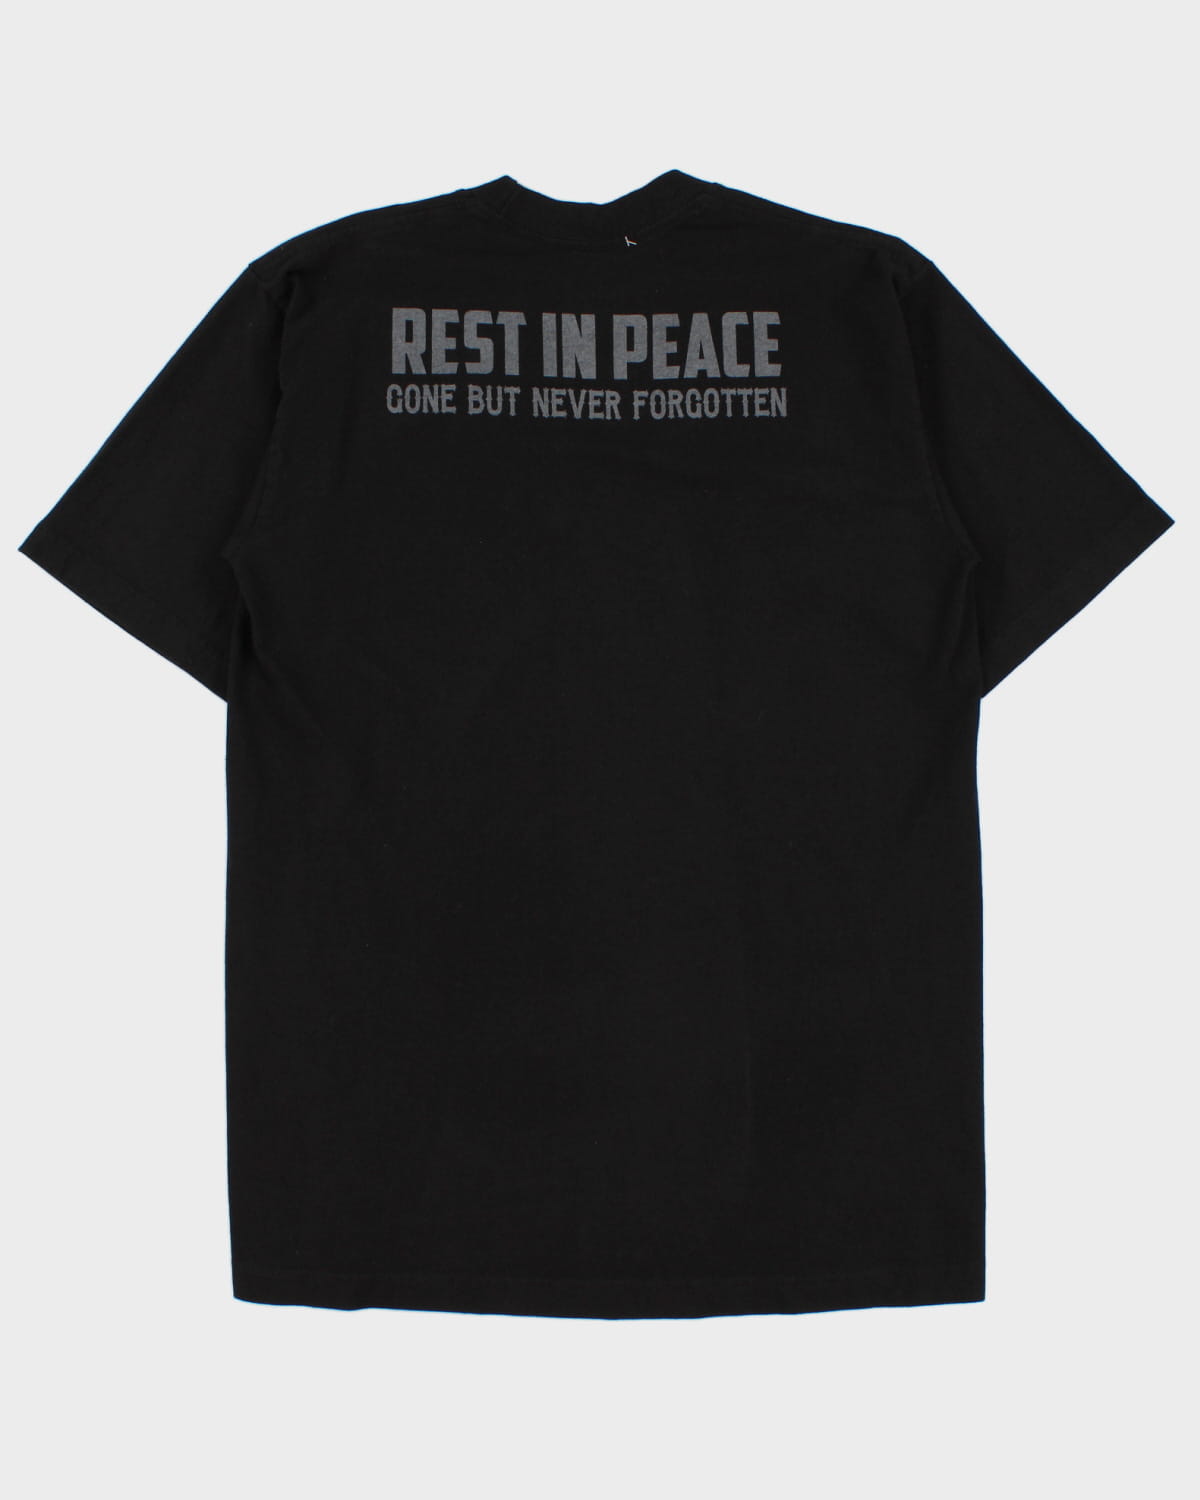 RIP Nipsey Hussle T-shirt - L